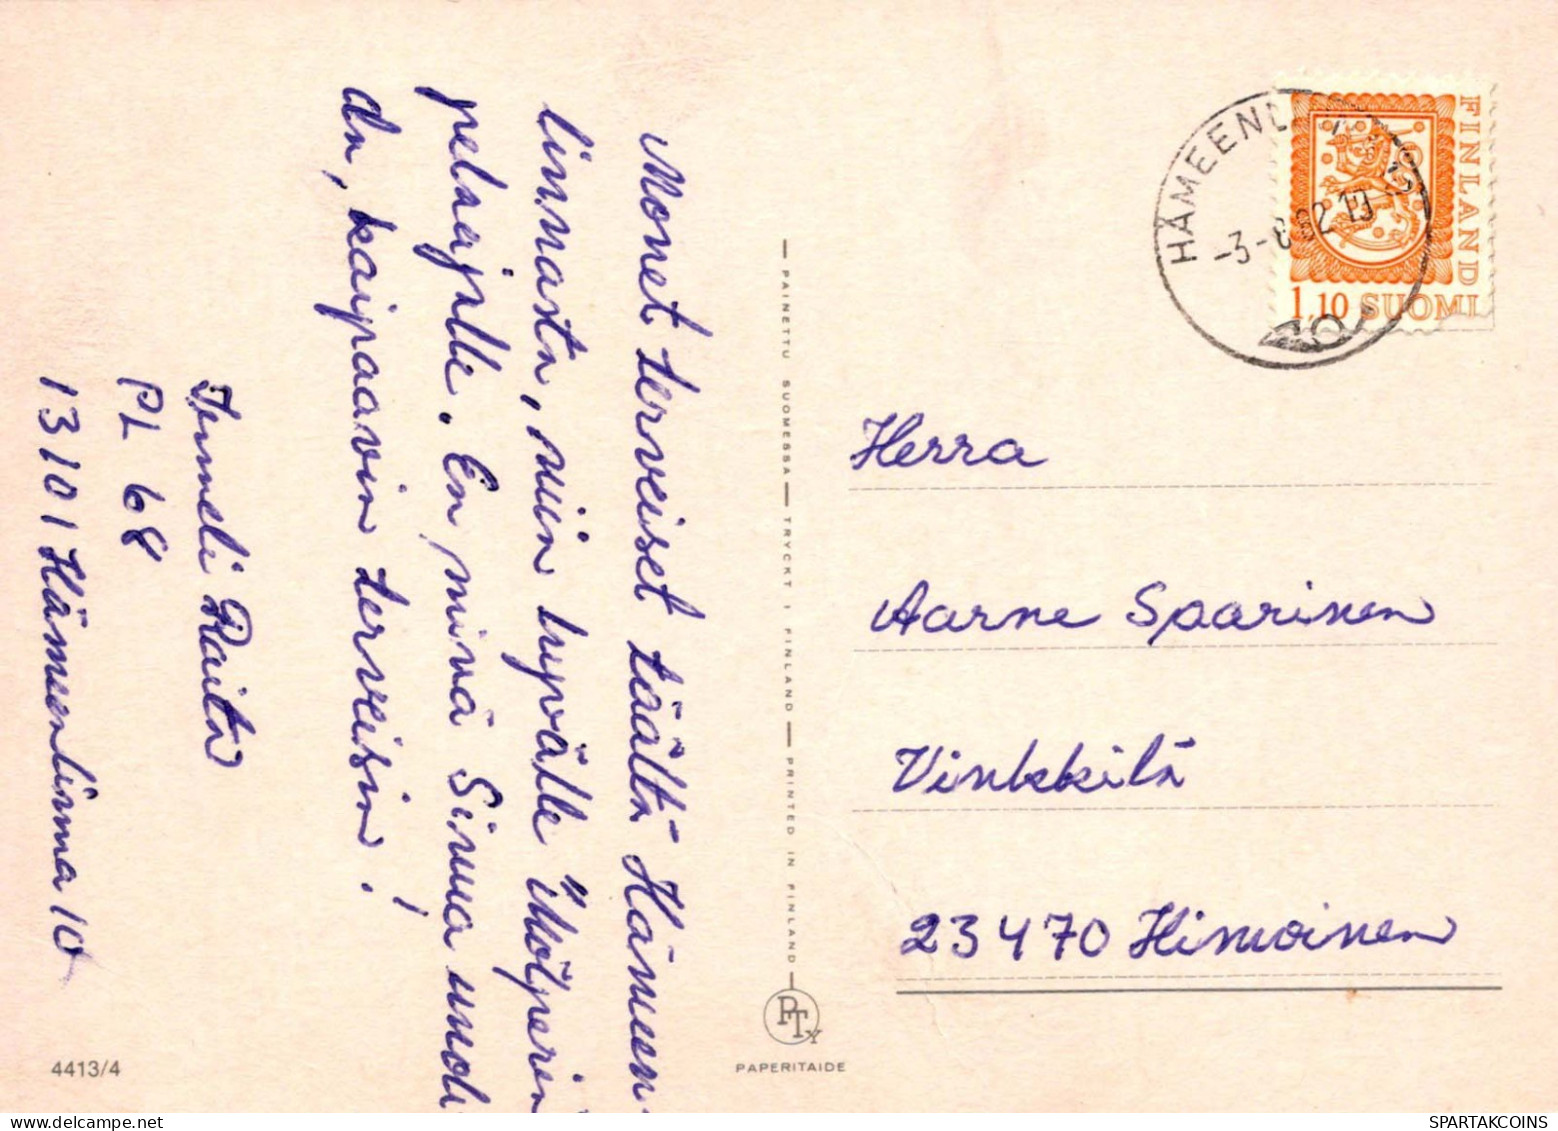 BAMBINO BAMBINO Scena S Paesaggios Vintage Postal CPSM #PBT565.IT - Scènes & Paysages